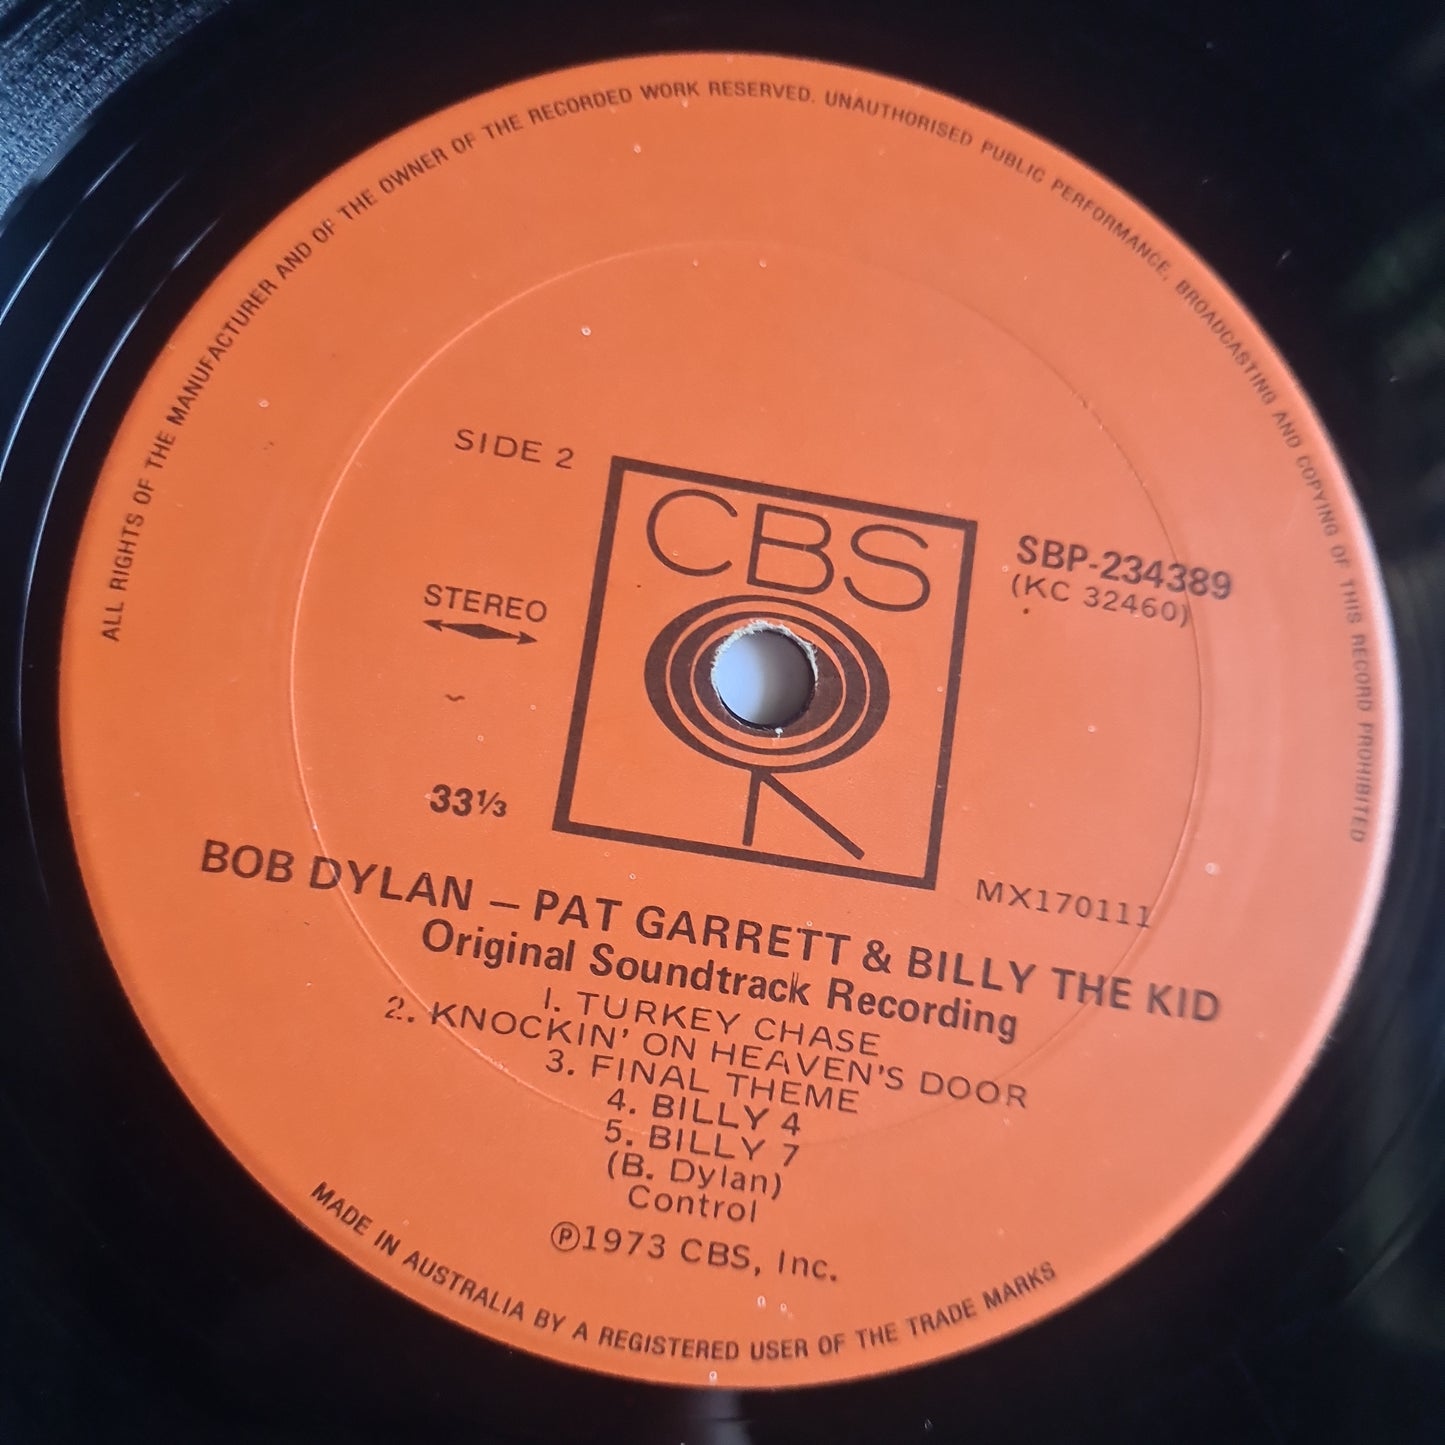 Bob Dylan – Pat Garrett & Billy The Kid (Original Soundtrack Recording) - 1973 - Vinyl Record